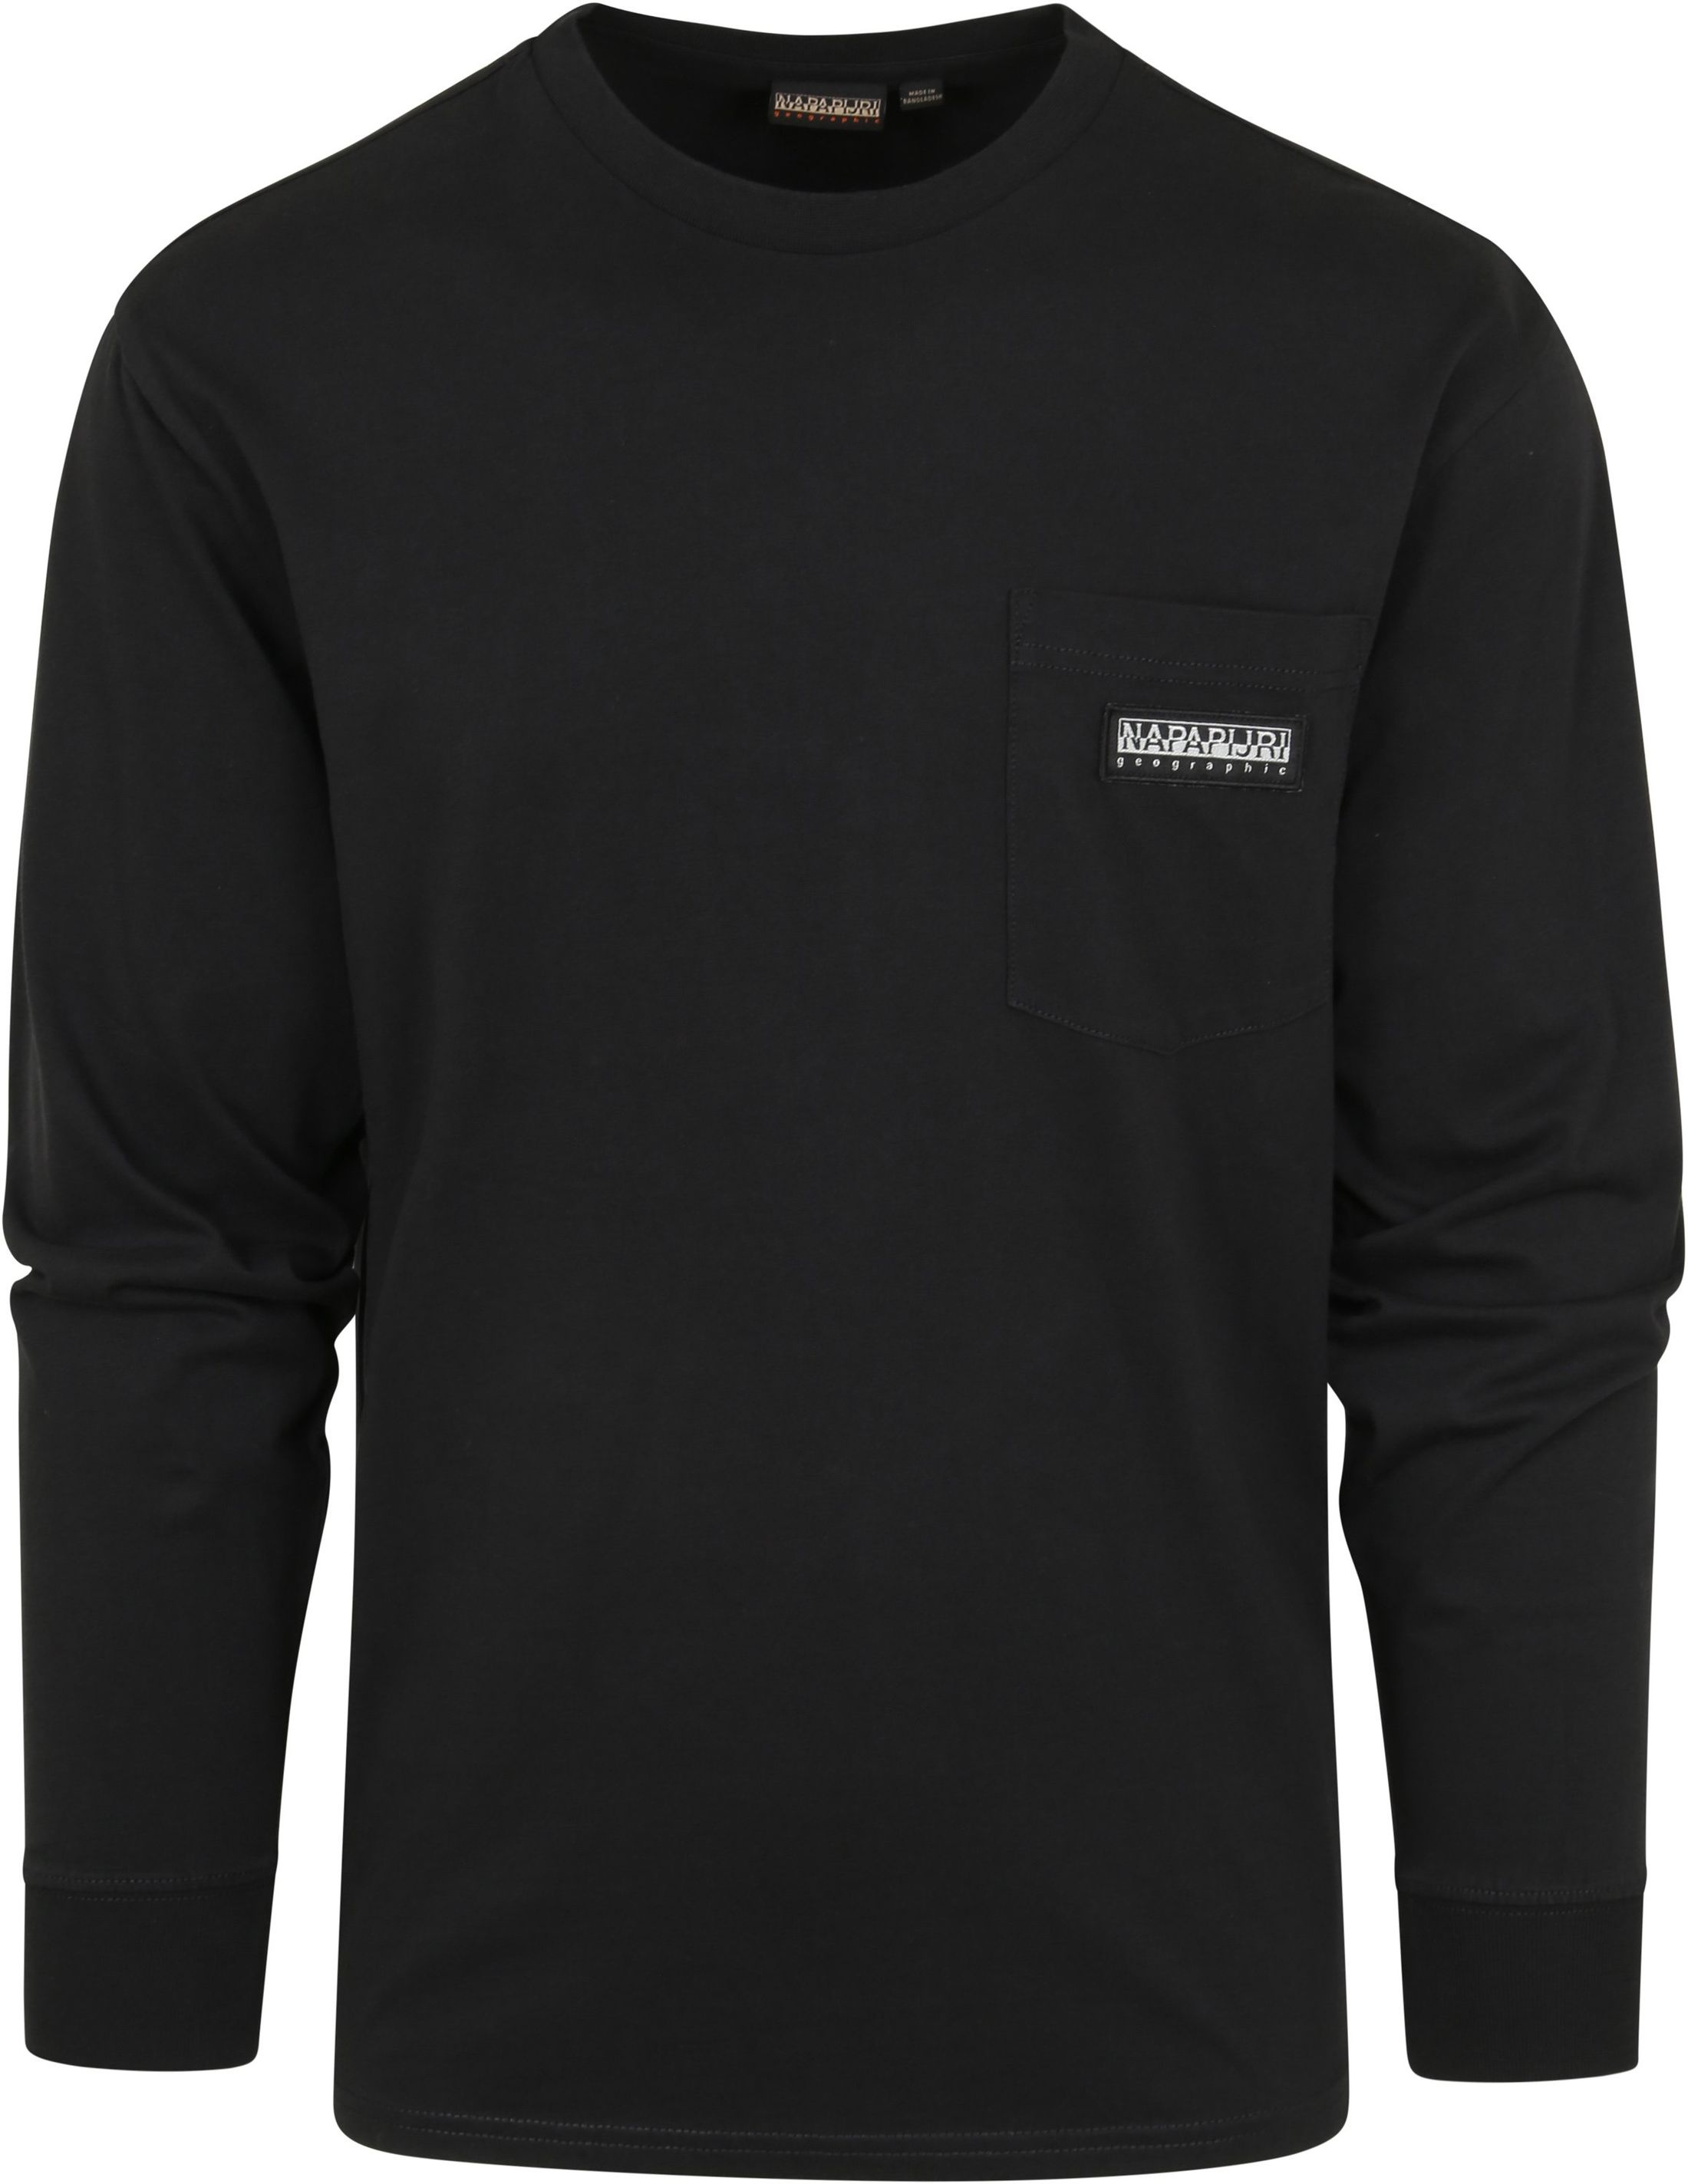 Napapijri S-Morgex Longsleeve T Shirt Black size L